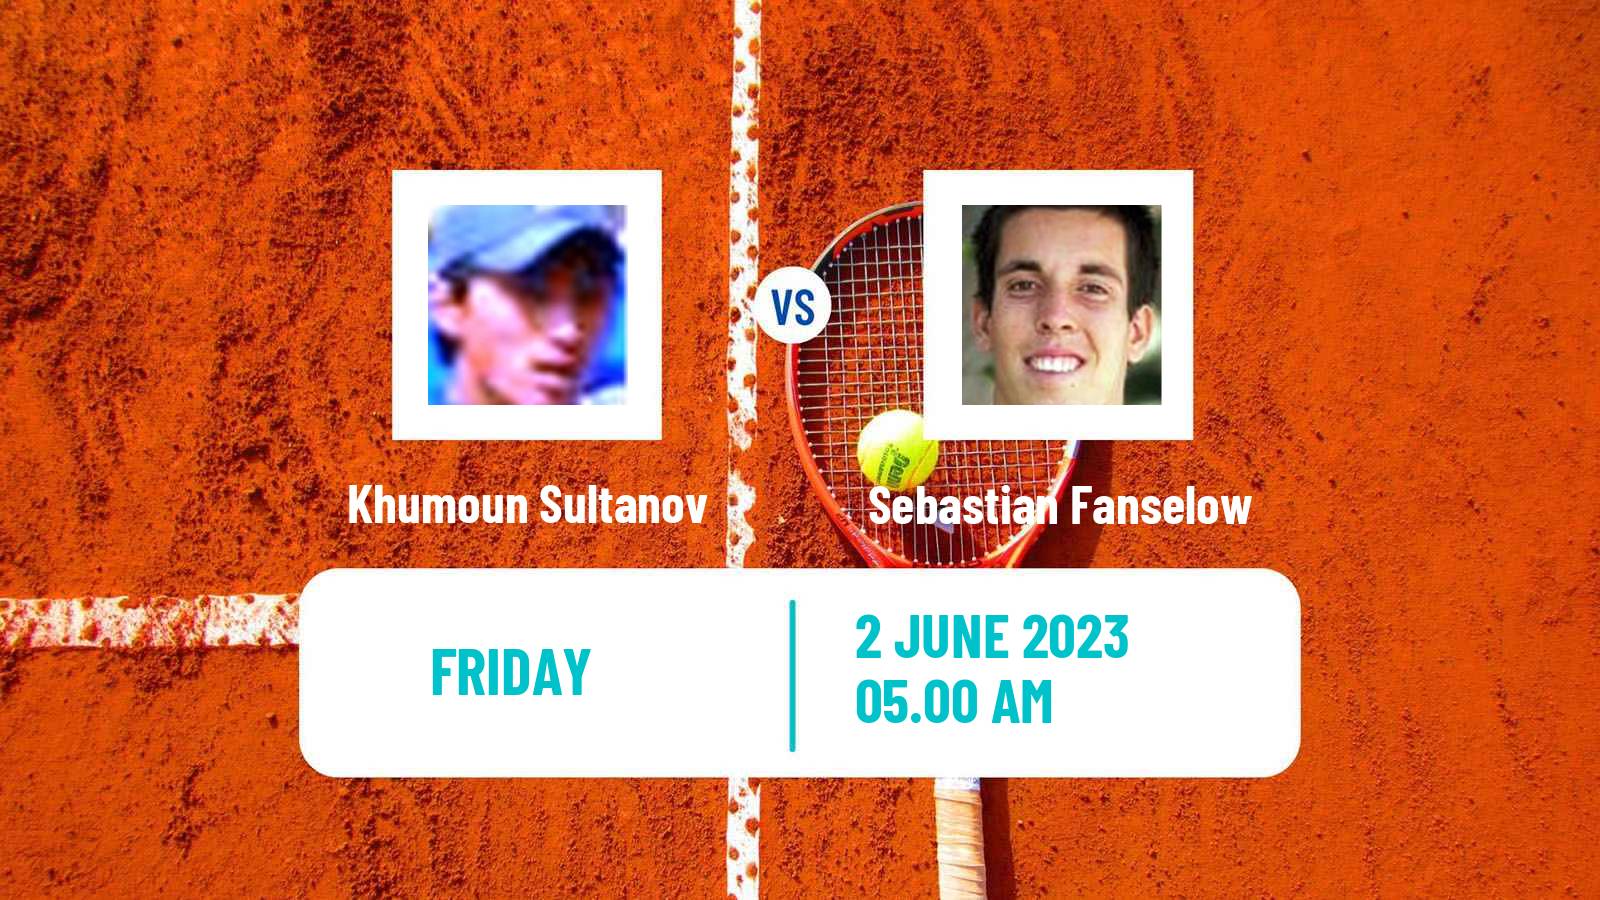 Tennis ITF M25 Jablonec Nad Nisou Men Khumoun Sultanov - Sebastian Fanselow